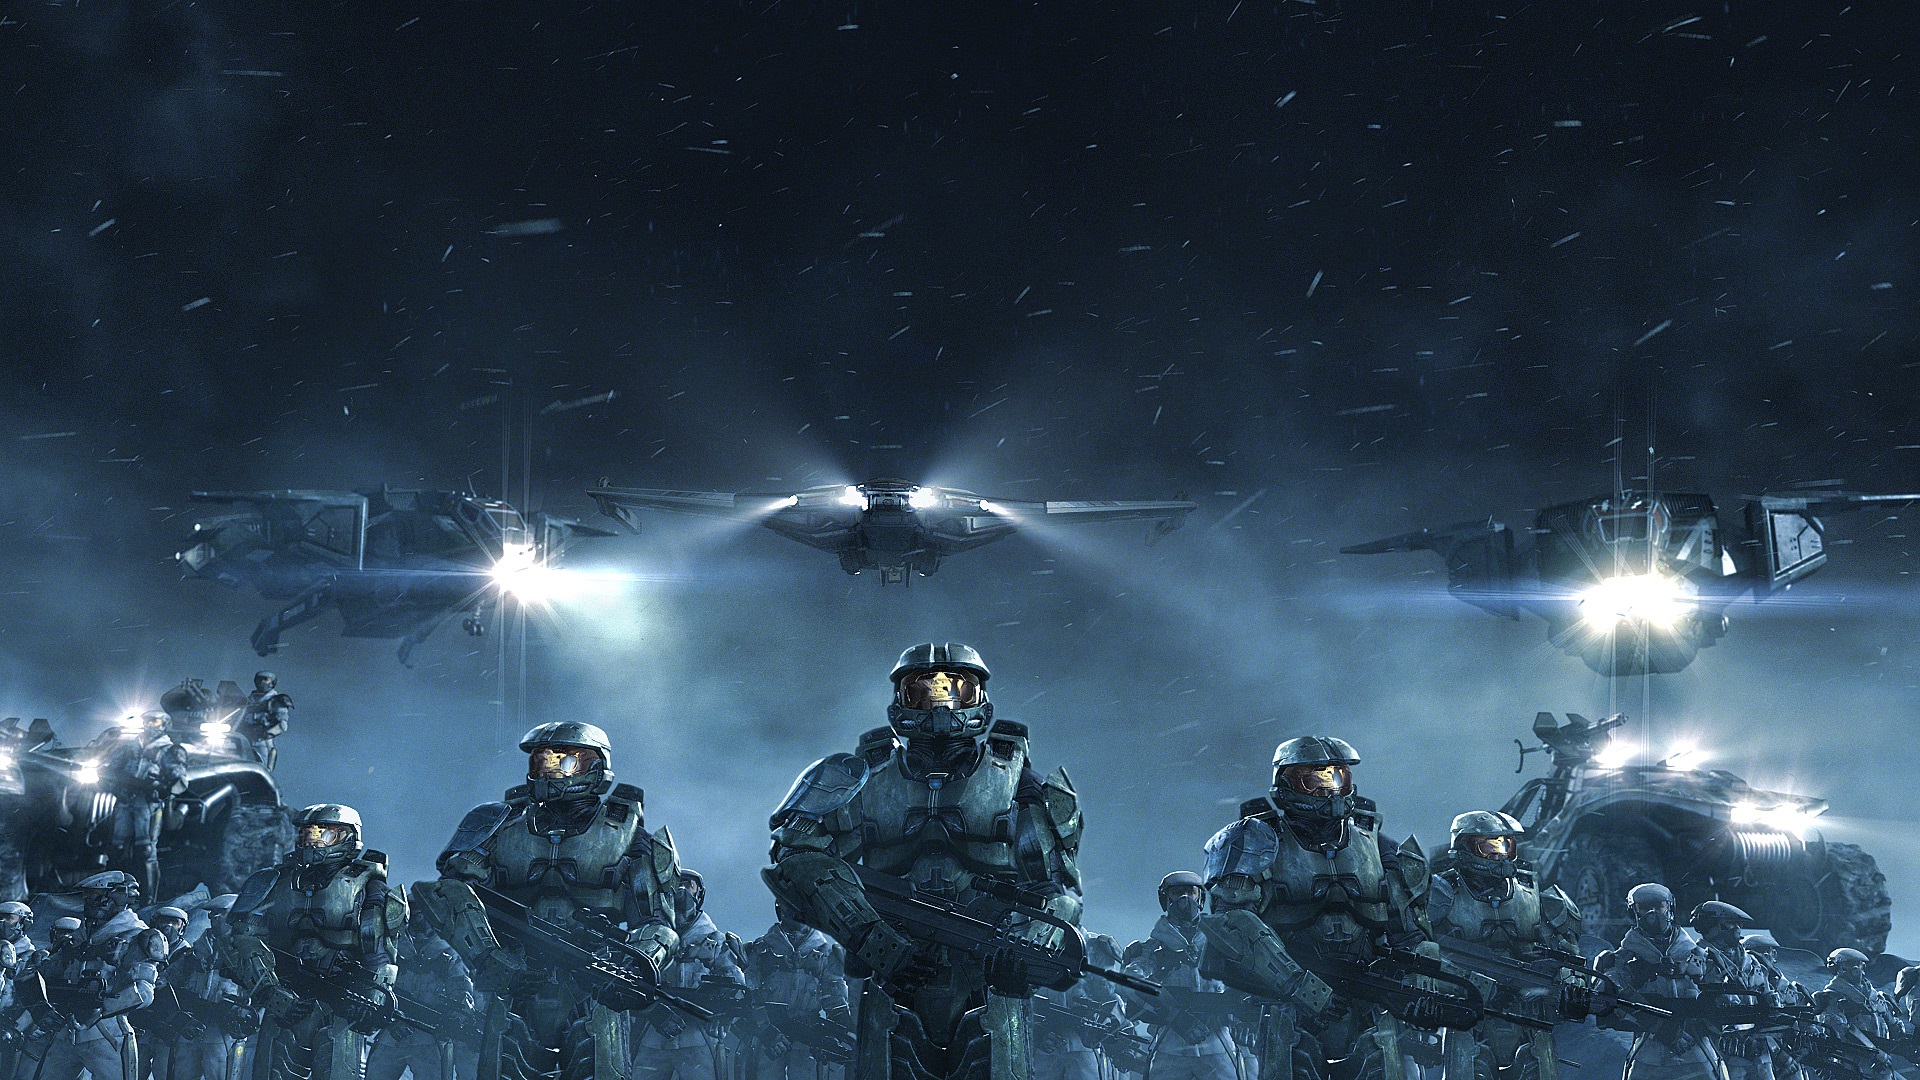 Halo Wars X06 teaser screencap showcasing Spartan Group Omega